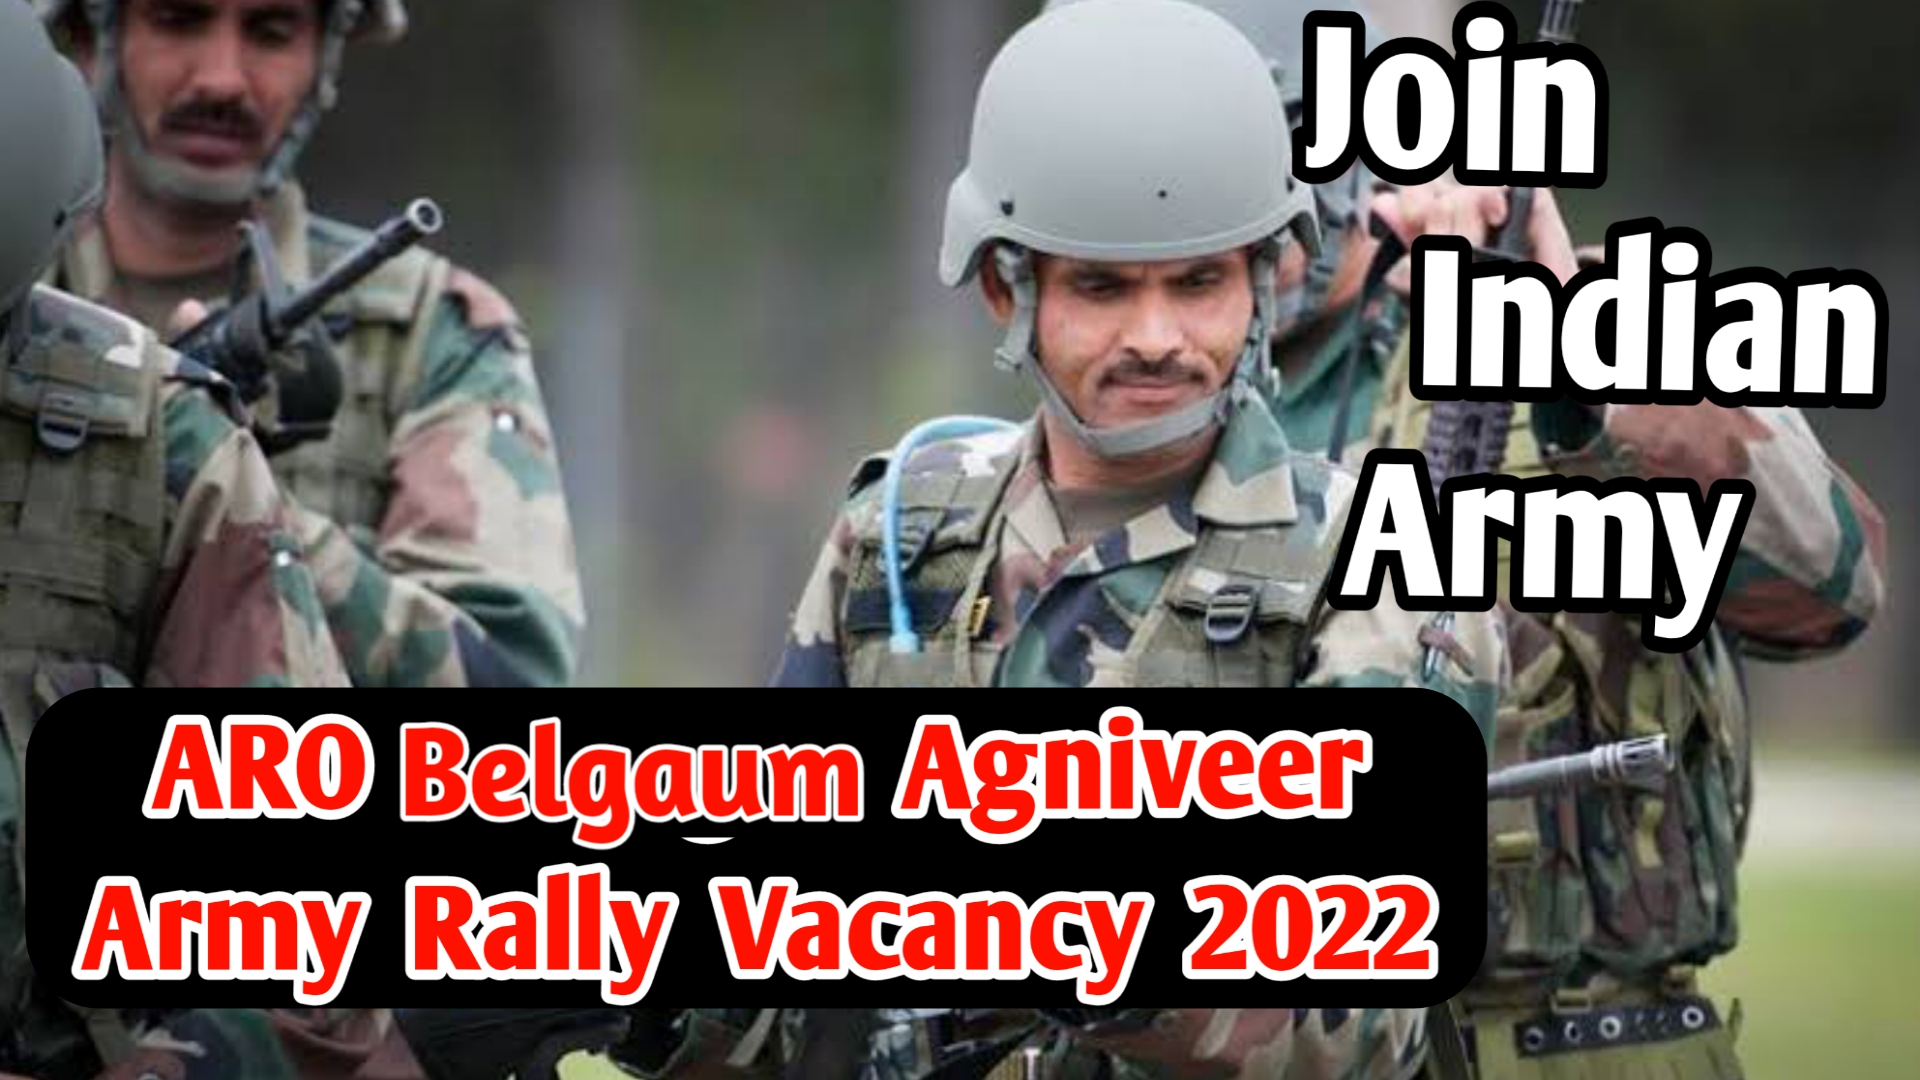 ARO Belgaum Agniveer Army Rally Vacancy 2022